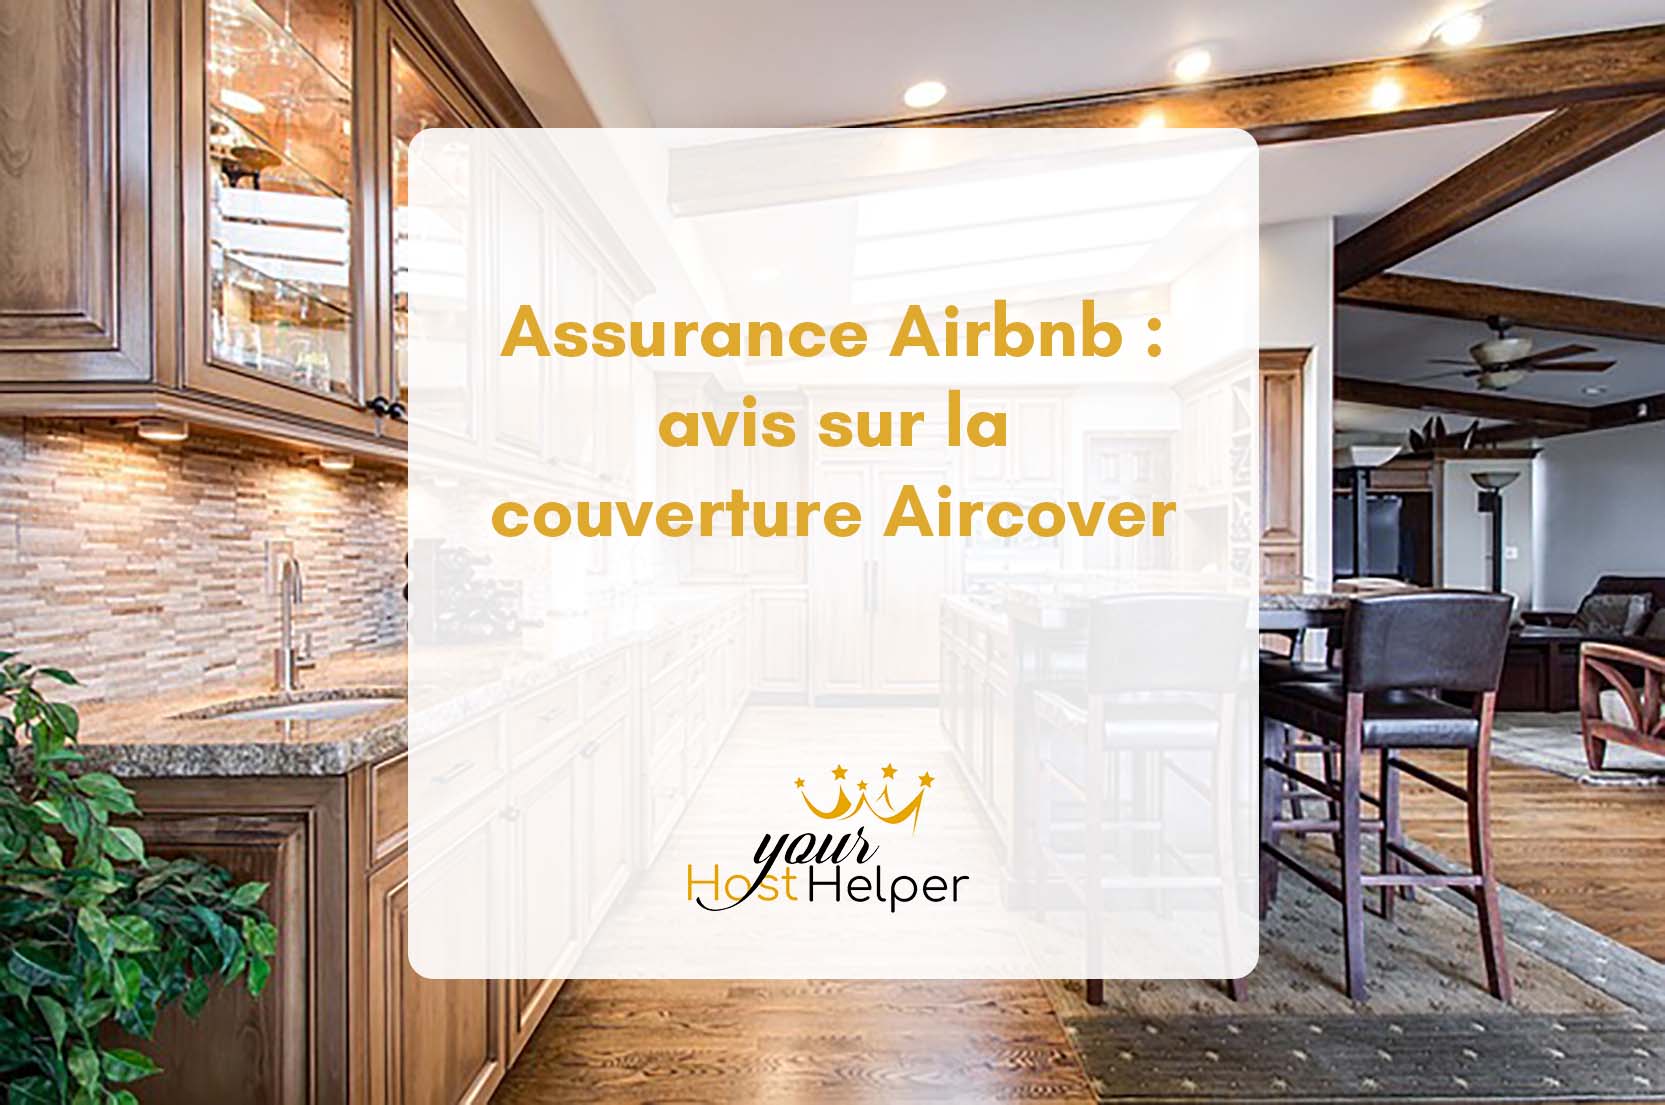 You are currently viewing <strong>Assurance Airbnb : la couverture Aircover selon votre conciergerie de Deauville</strong>